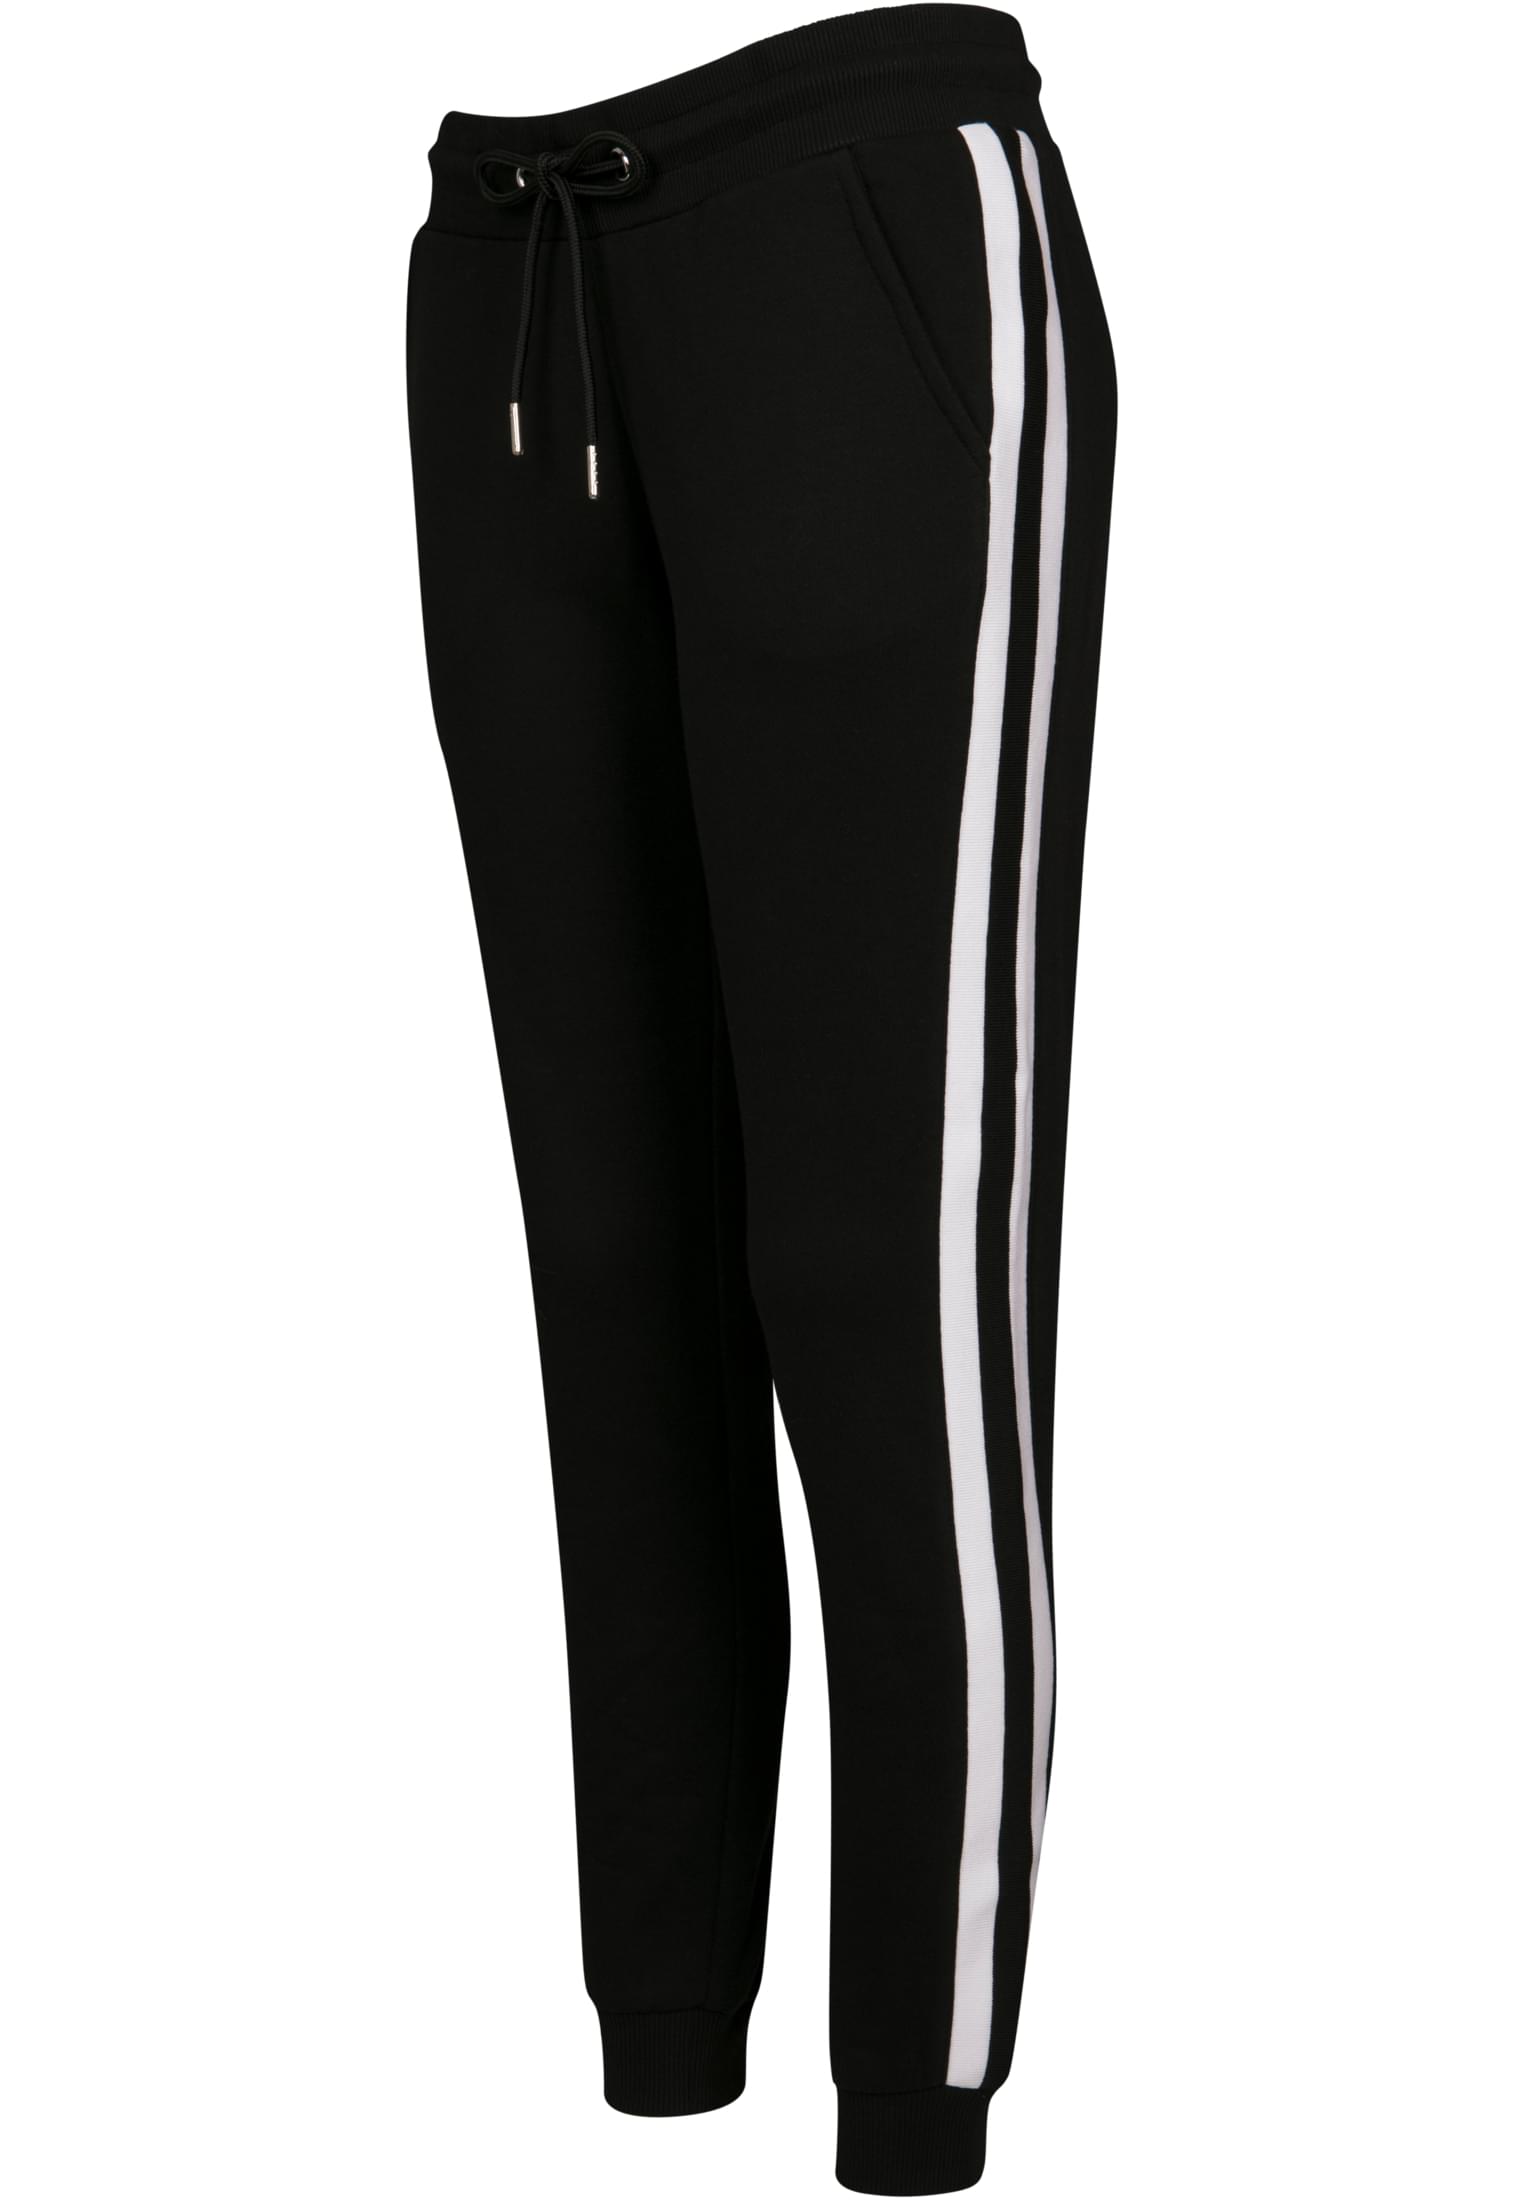 Damen Ladies College Contrast Sweatpants in Farbe black/white/black